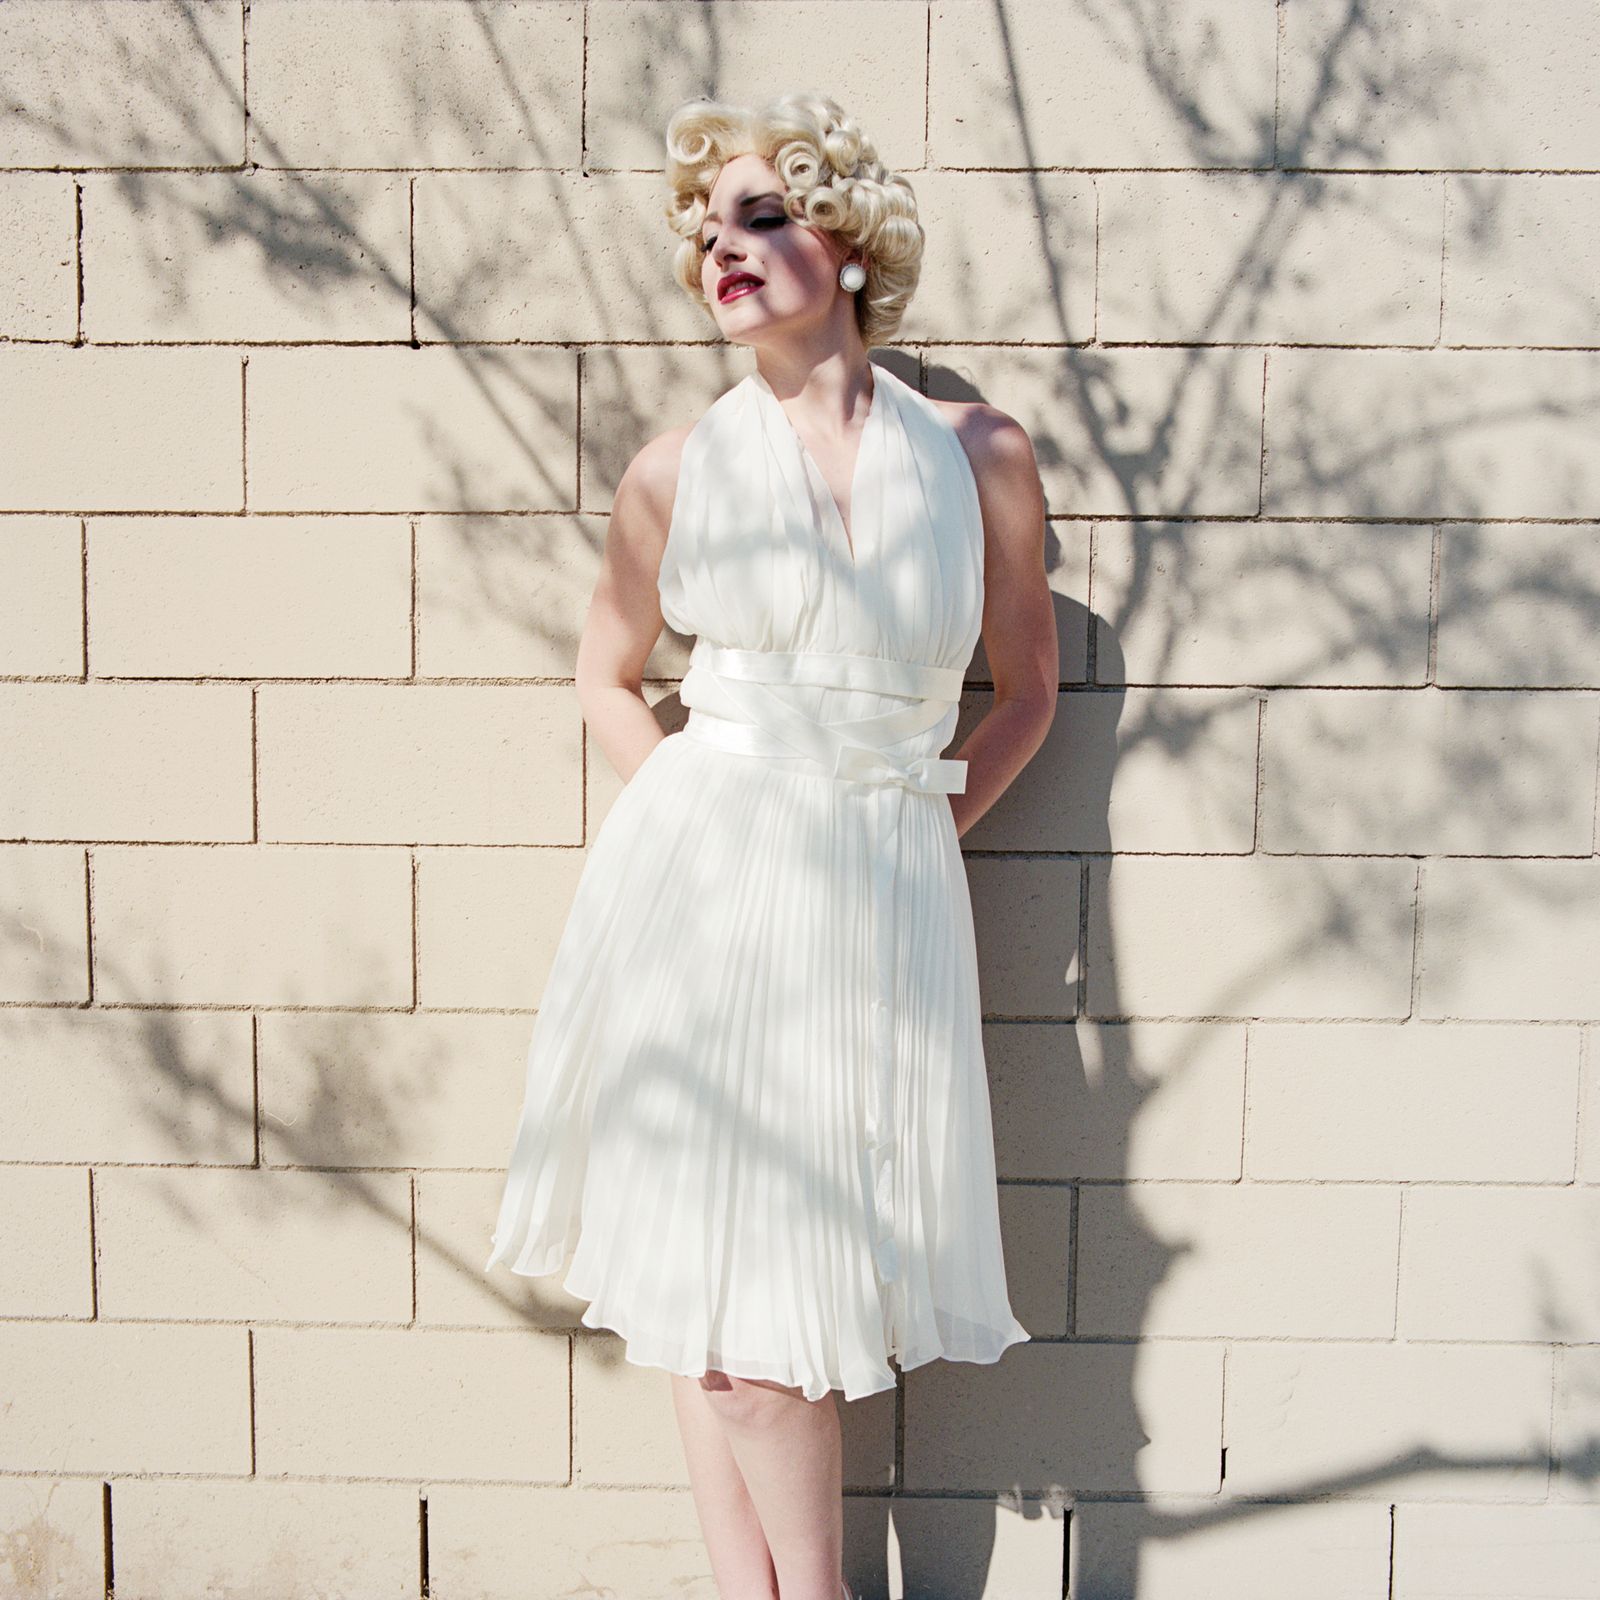 © Emily Berl - Ashley as Marilyn Monroe, Covina, CA, 2013.